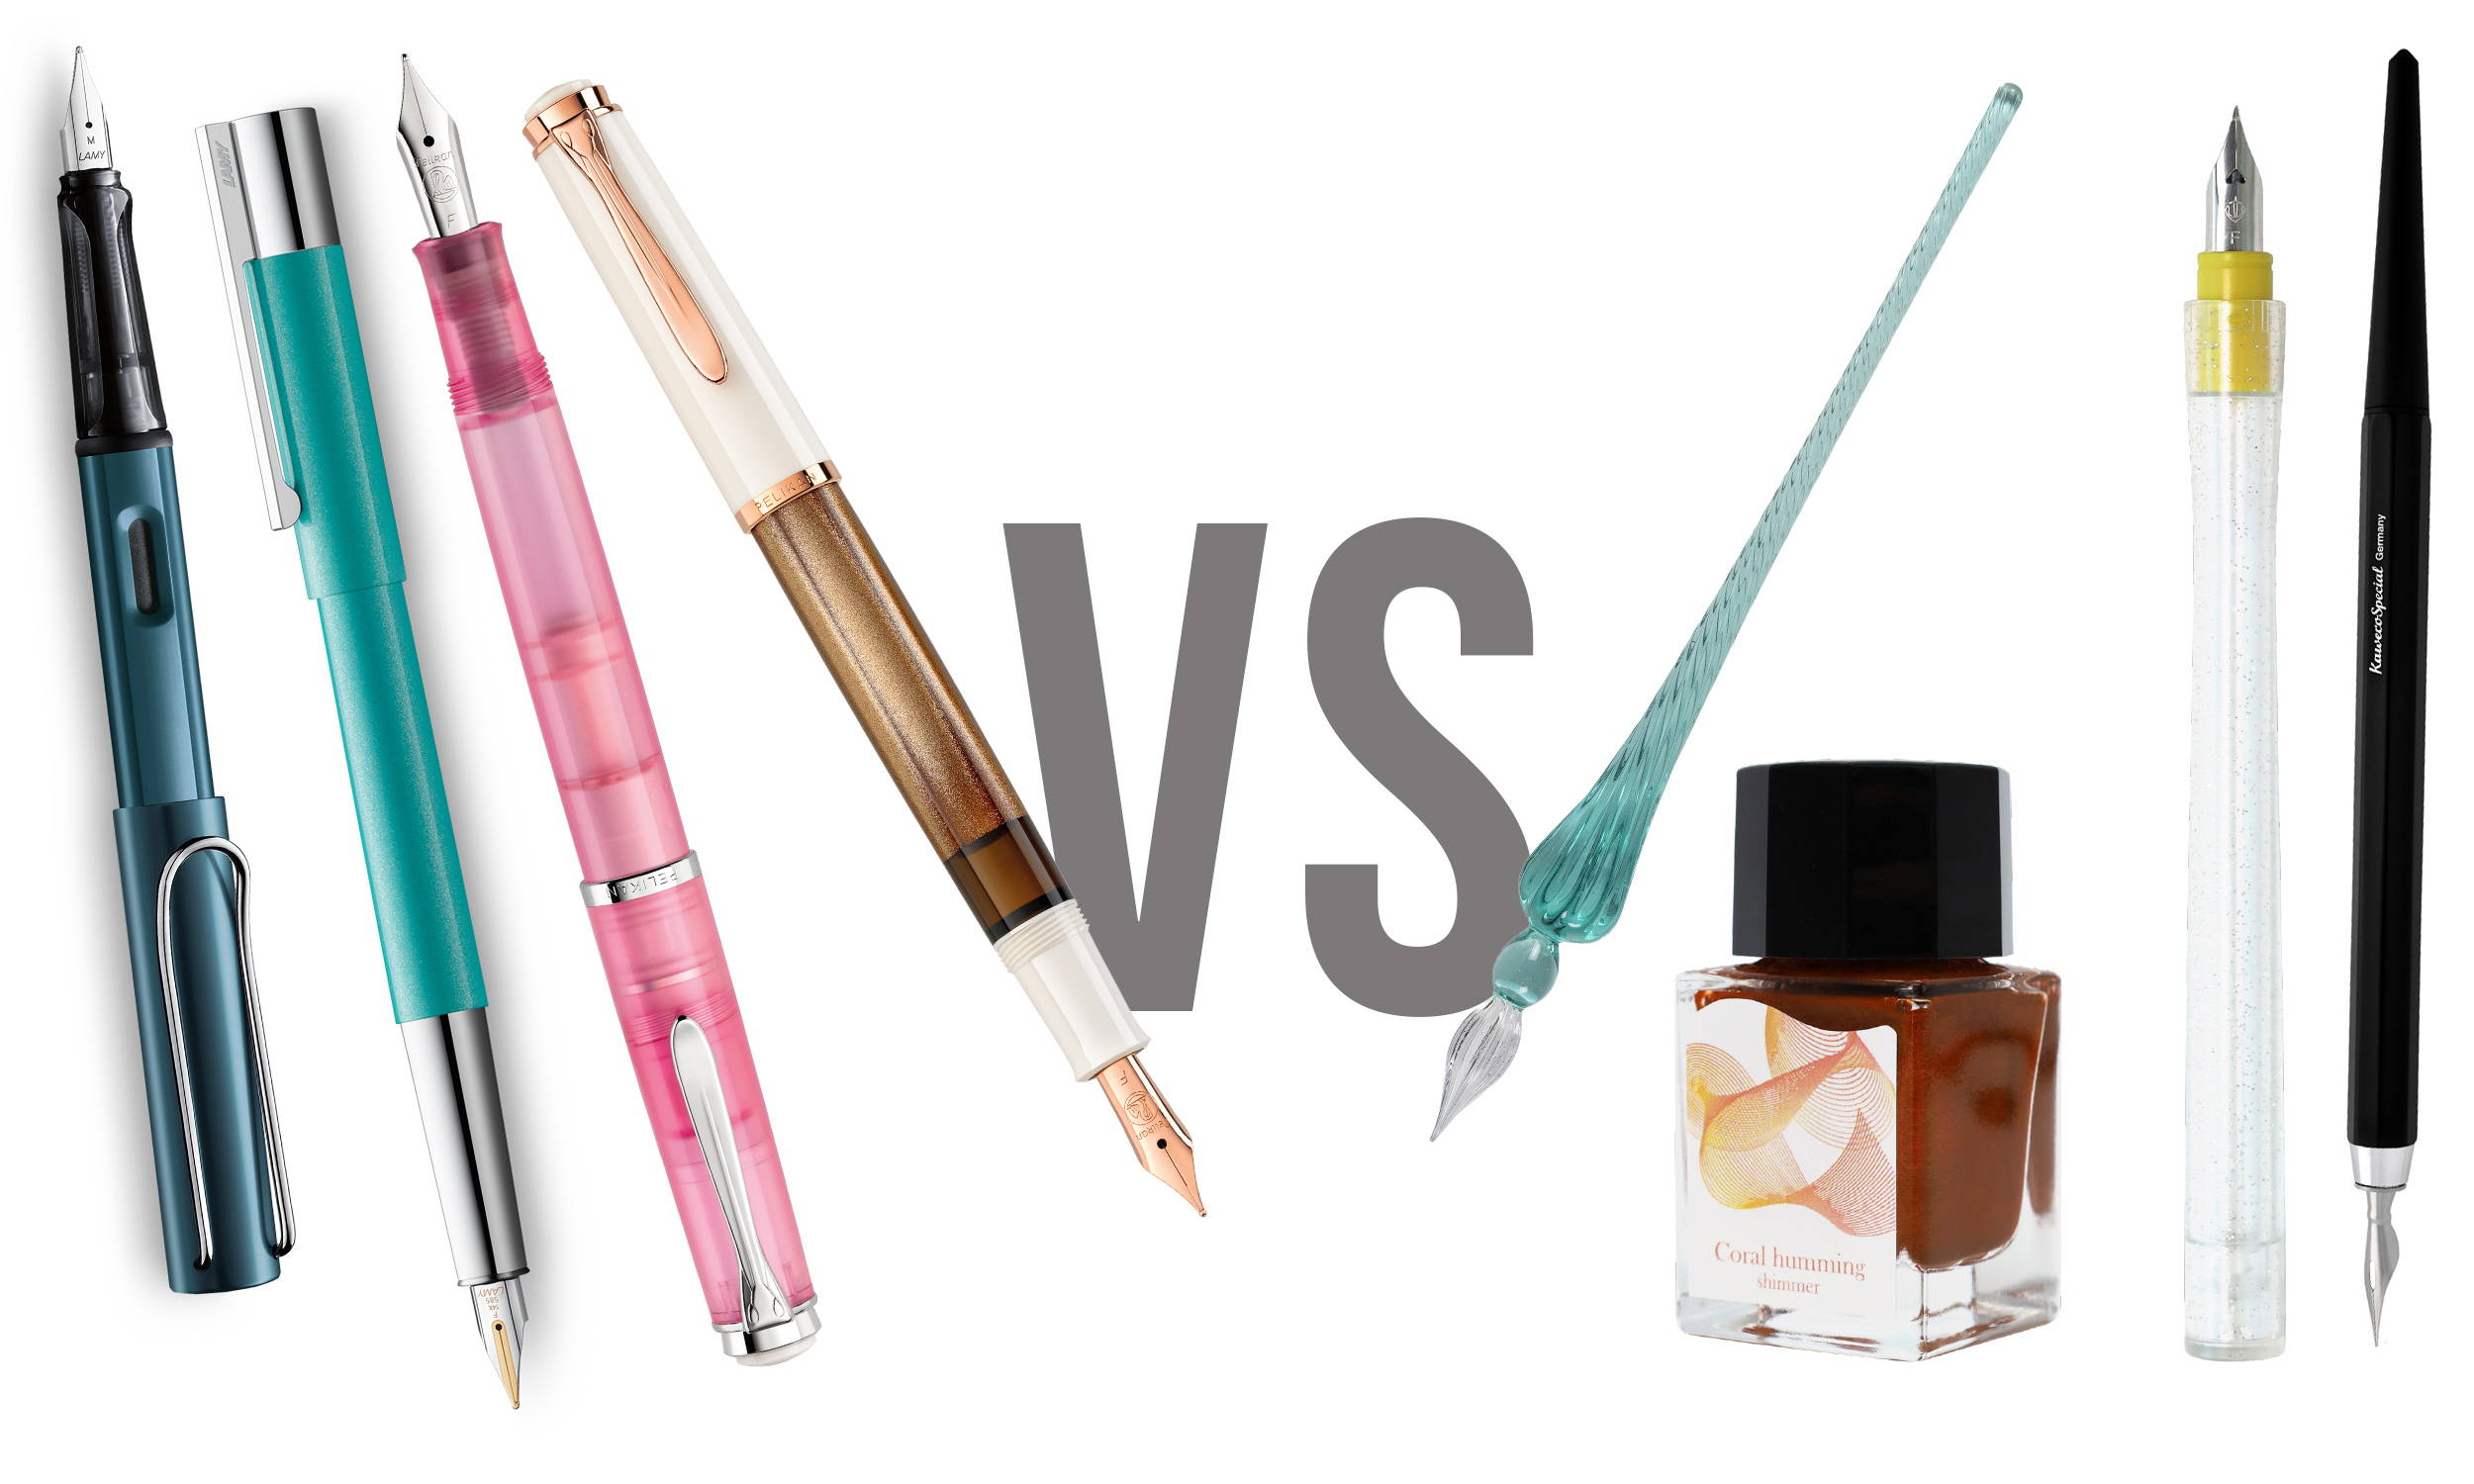 Dip pens versus fountain pens - a nib comparison